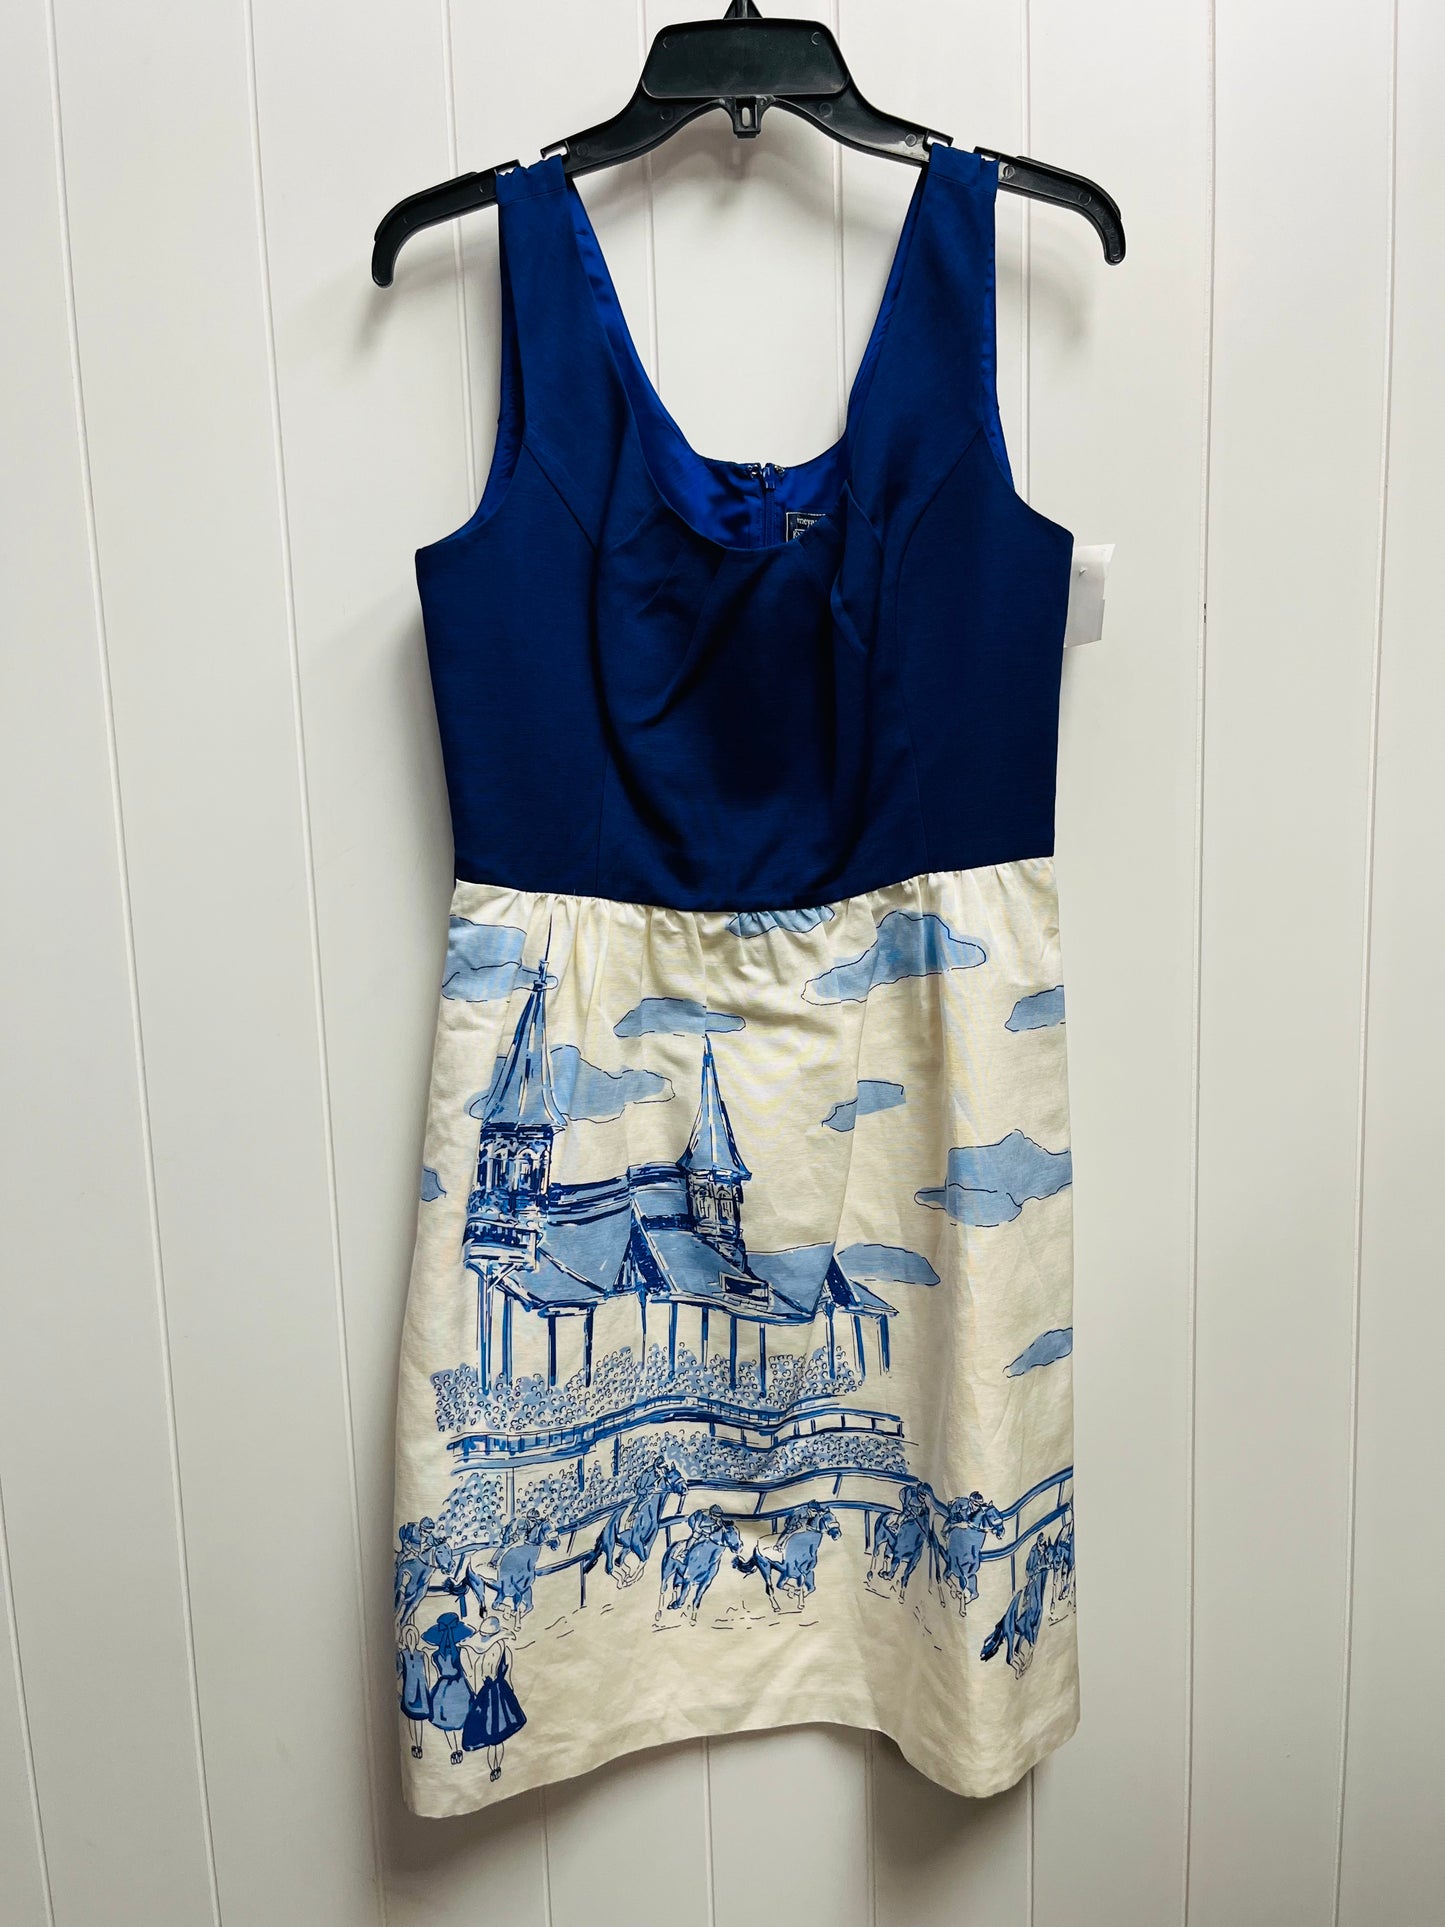 Blue & White Dress Casual Short Vineyard Vines, Size 6